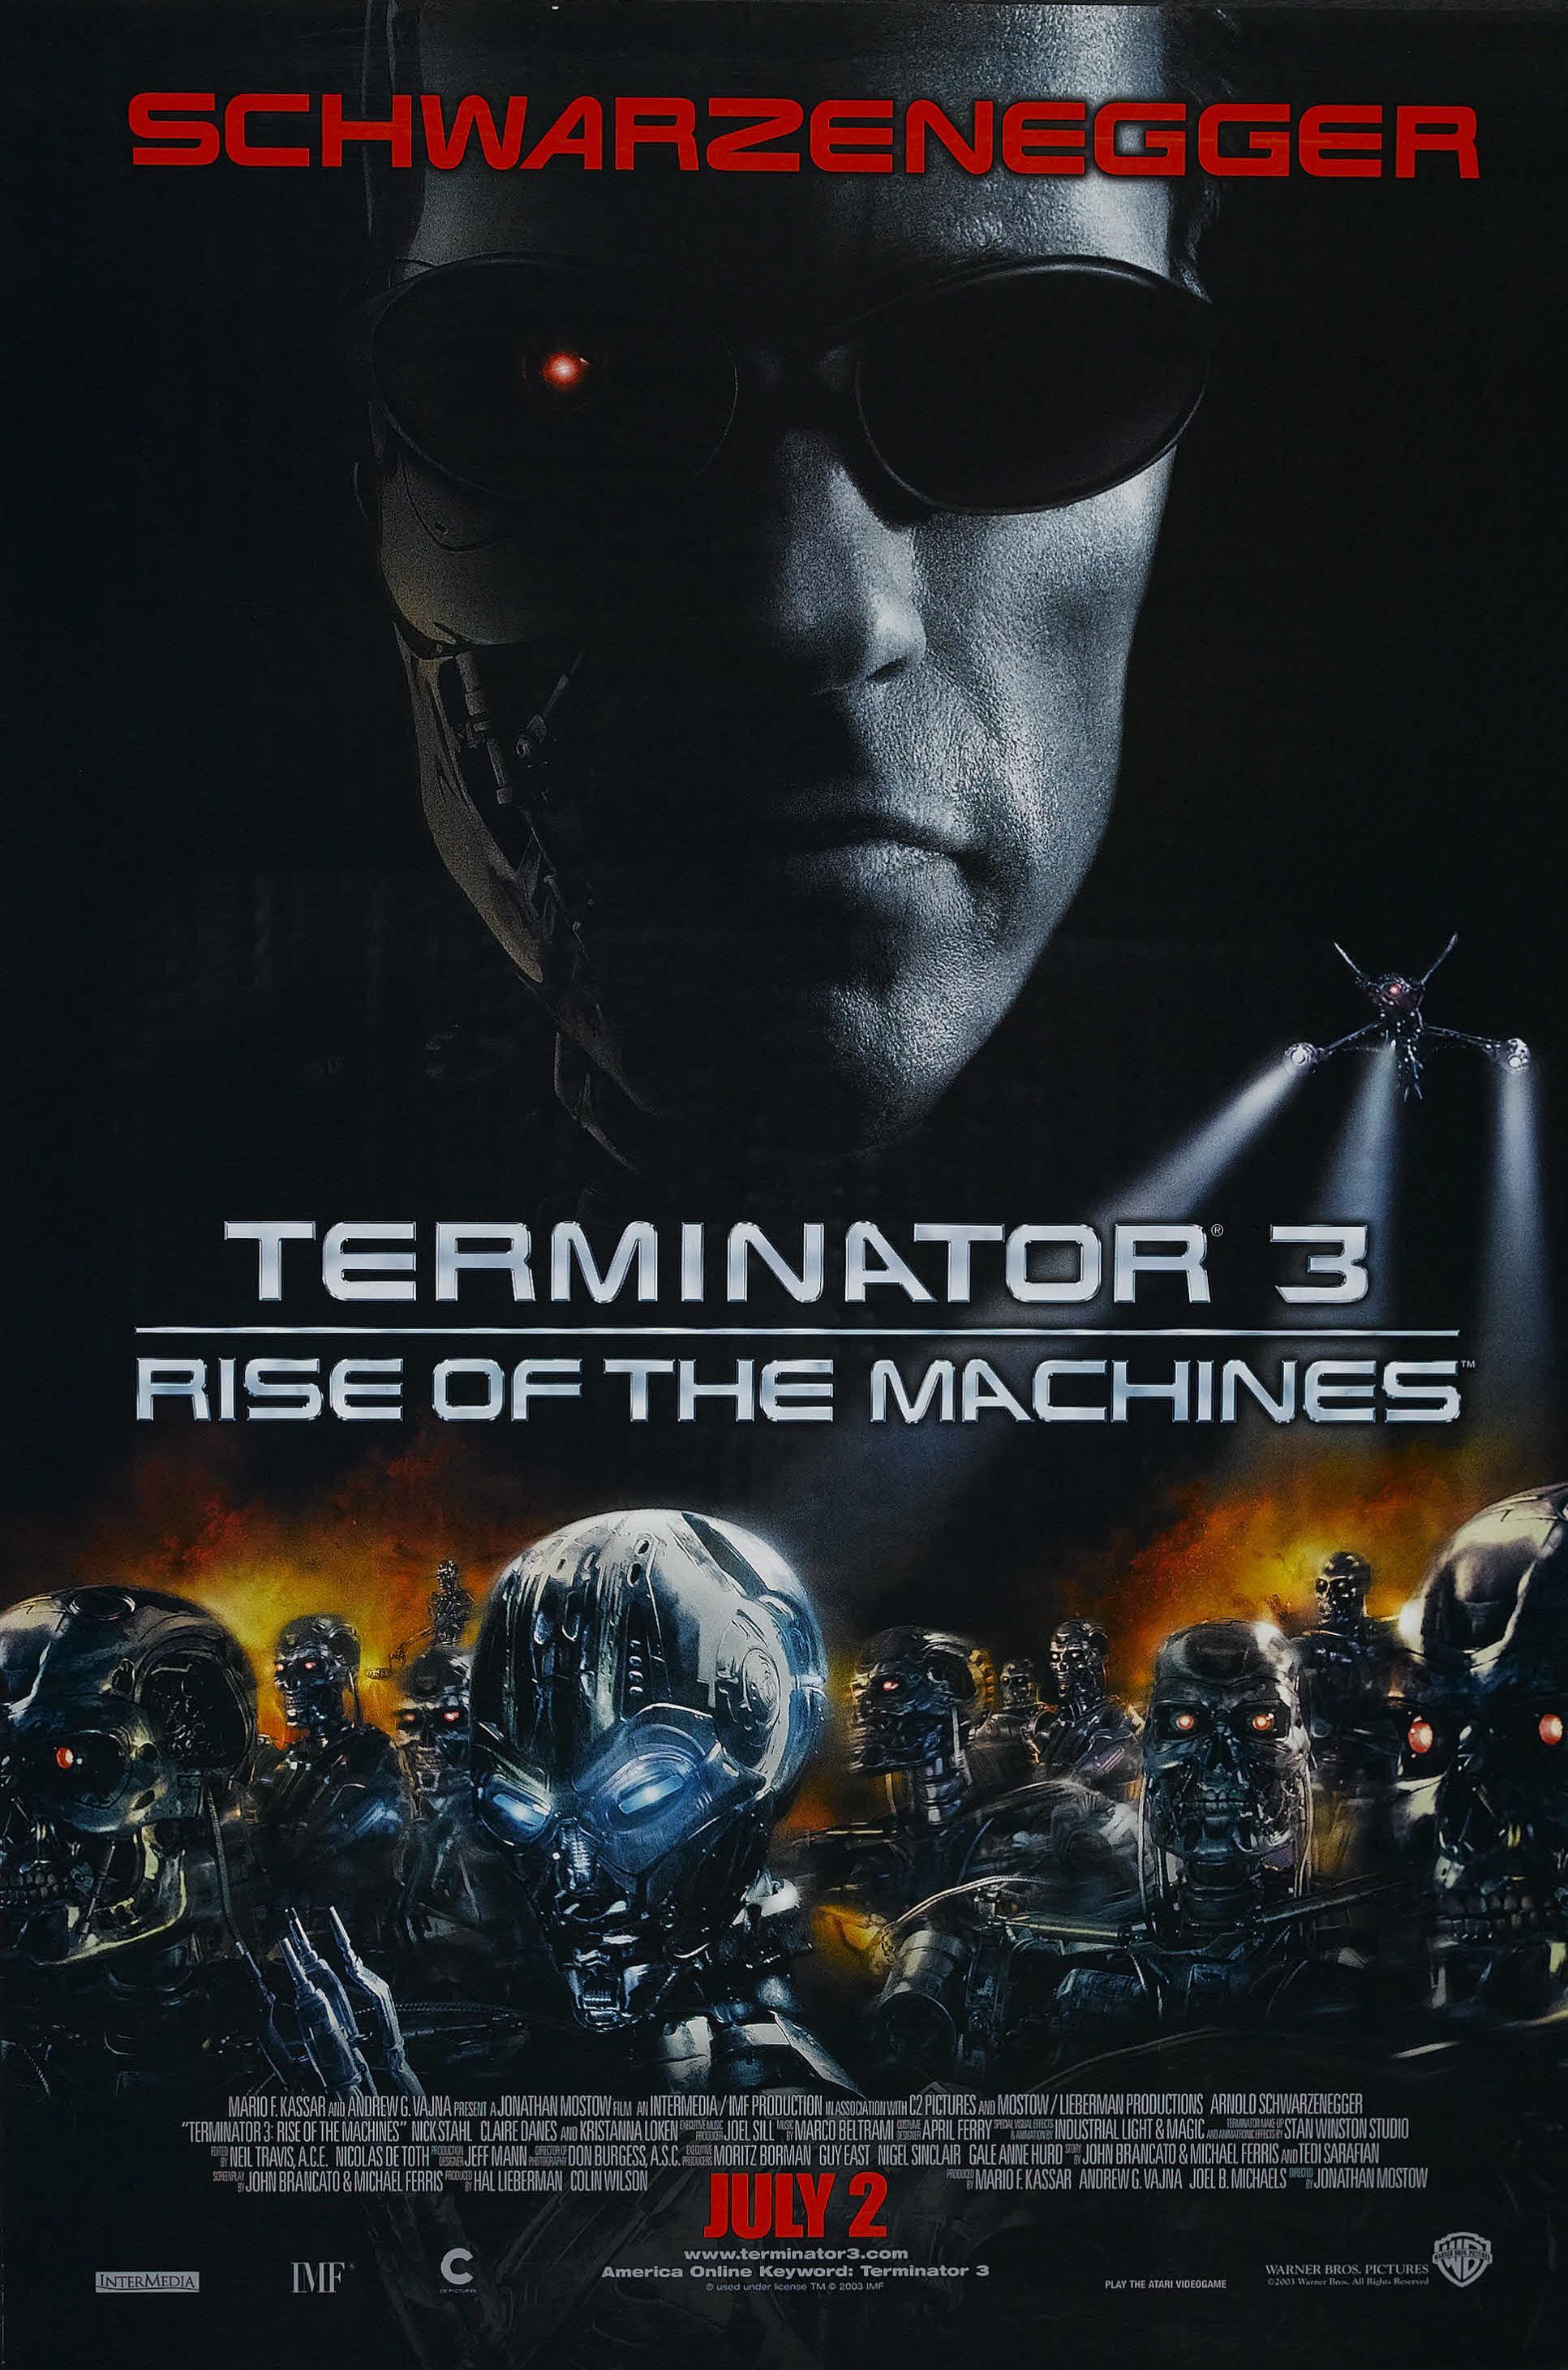 the cast of terminator 3